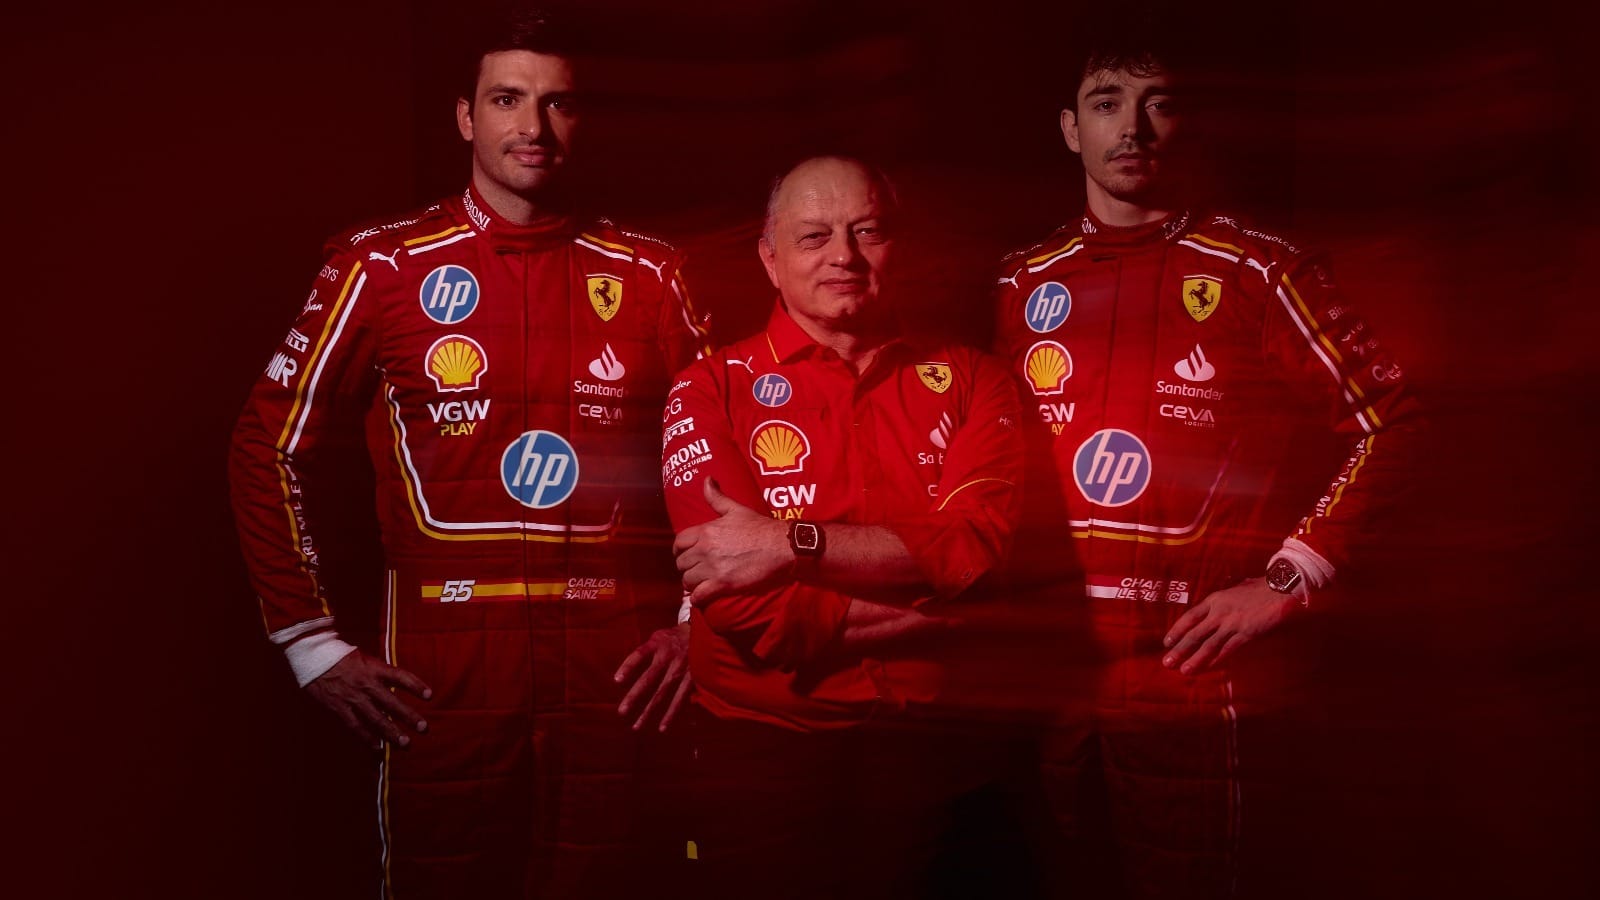 Ferrari e HP: Uma Parceria Veloz na Fórmula 1